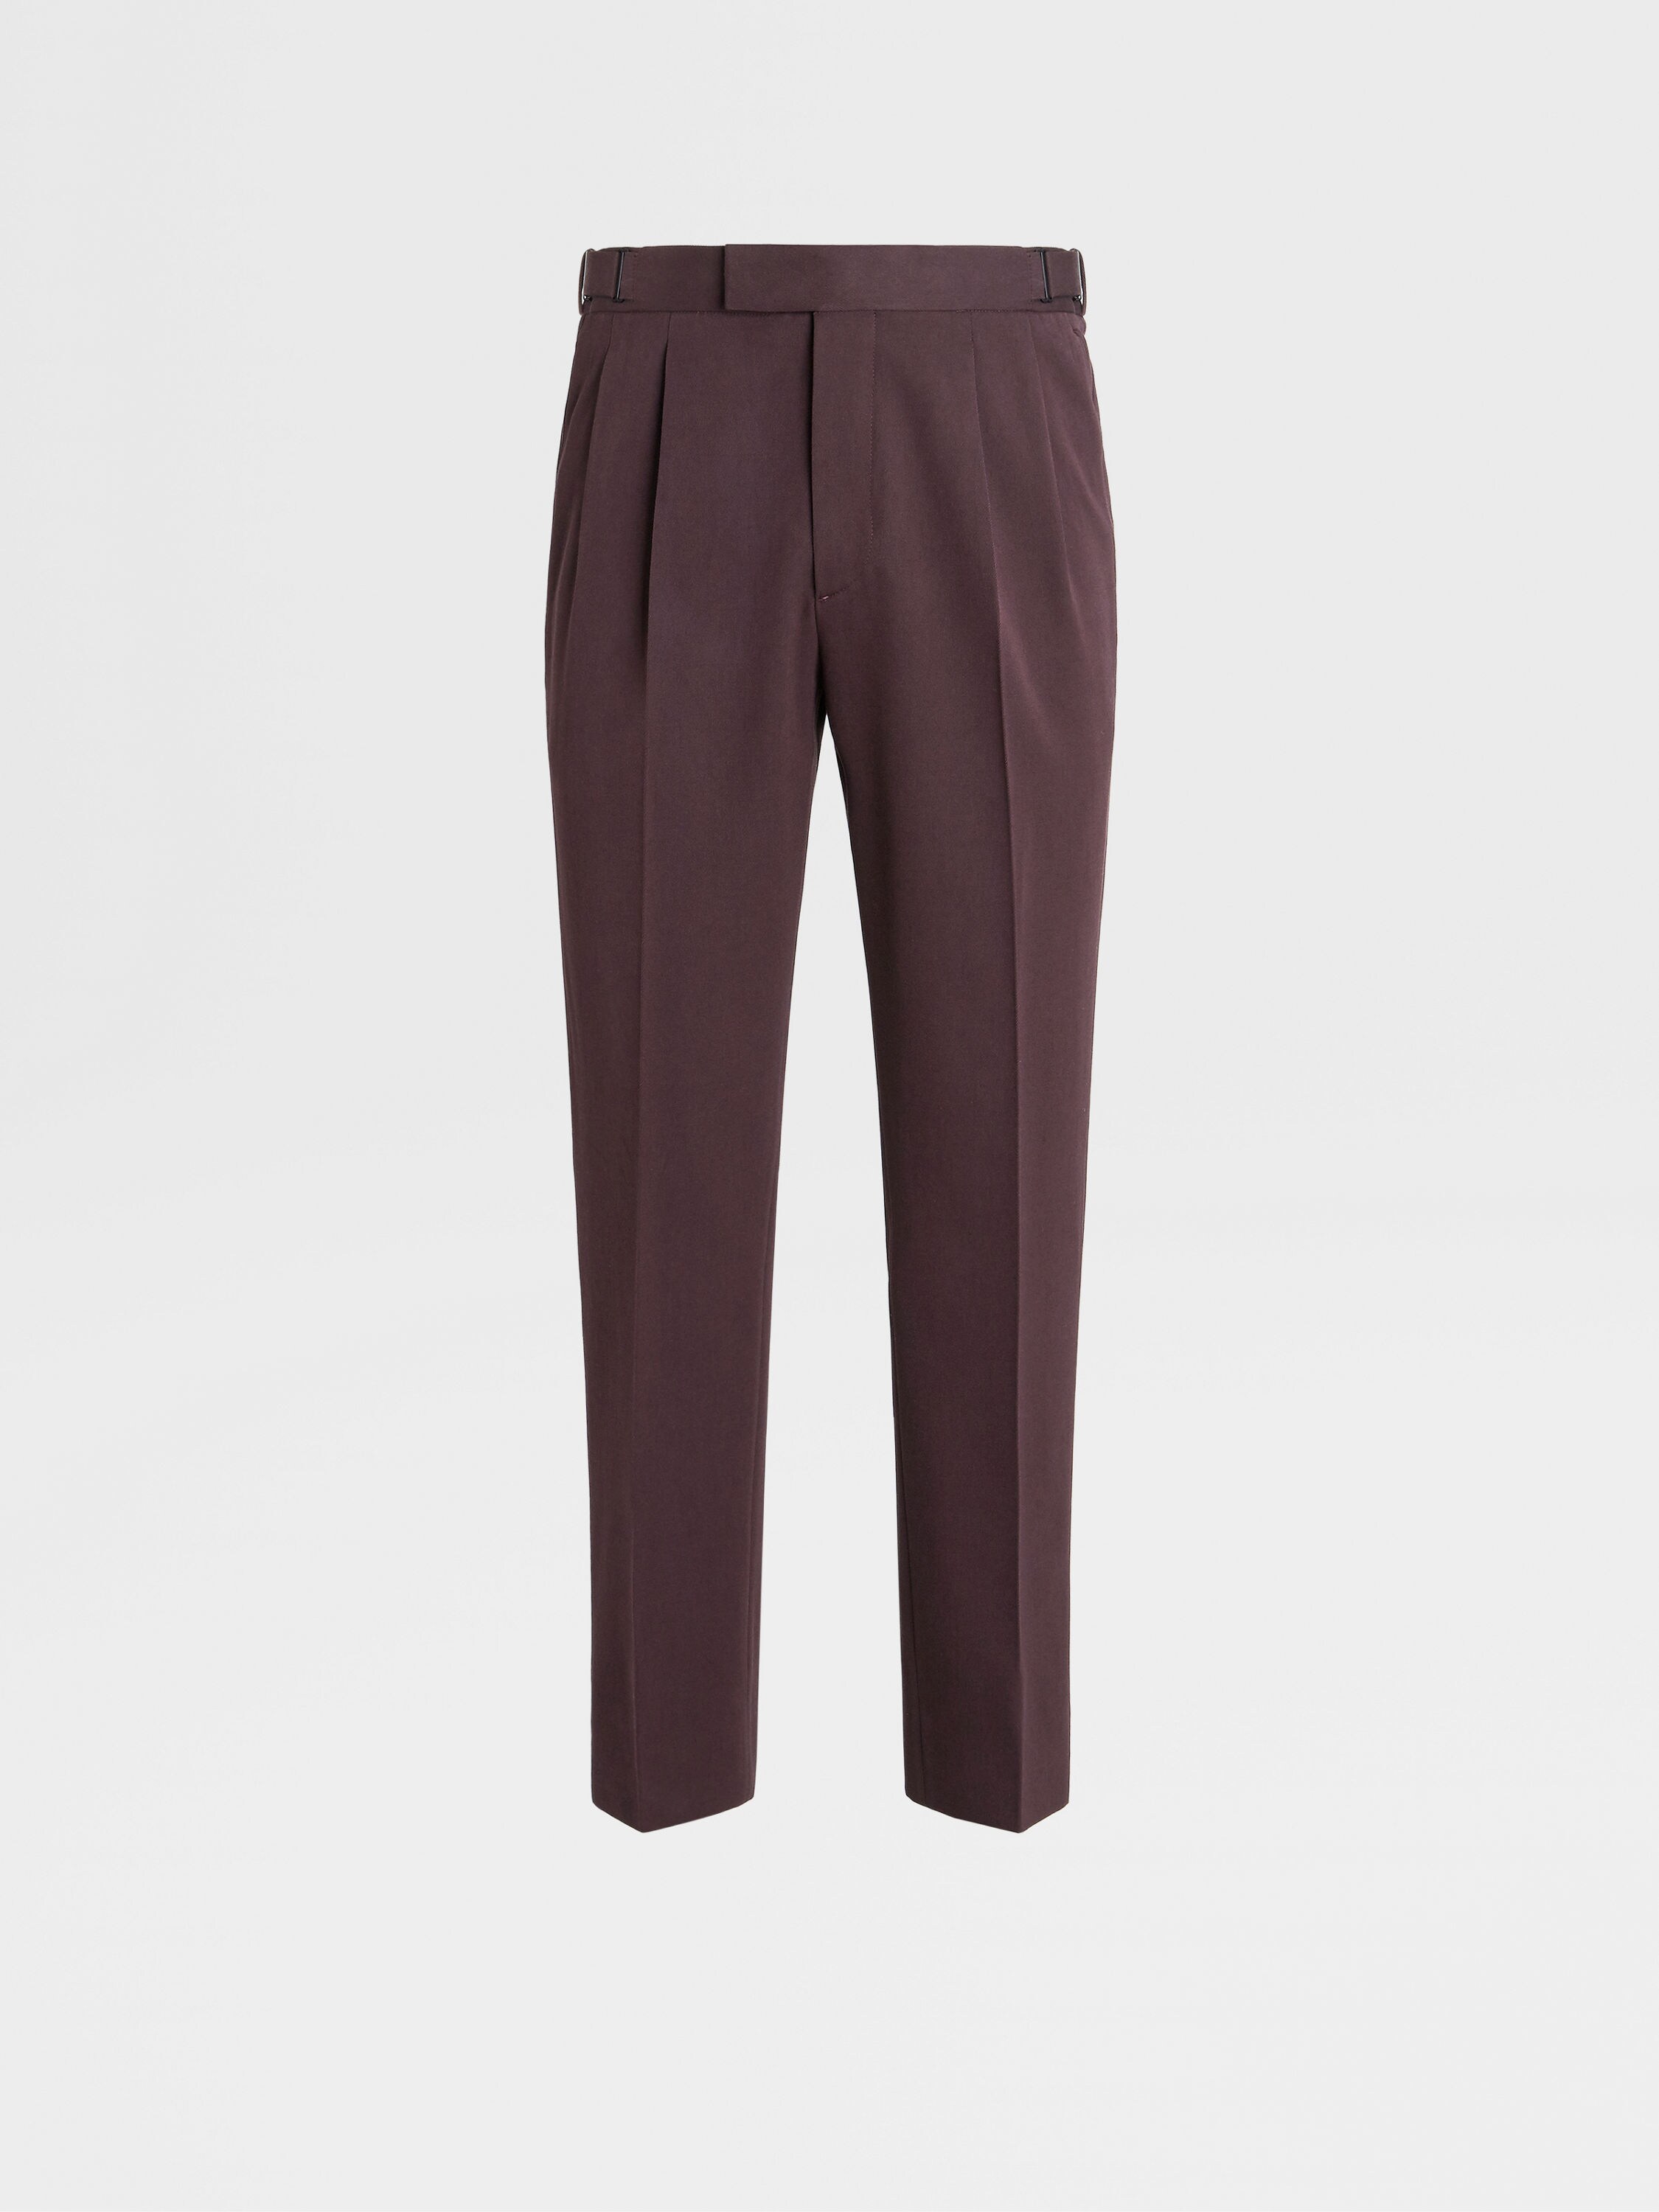 Dark Burgundy Cotton and Wool Pants FW23 28048589 | Zegna HK